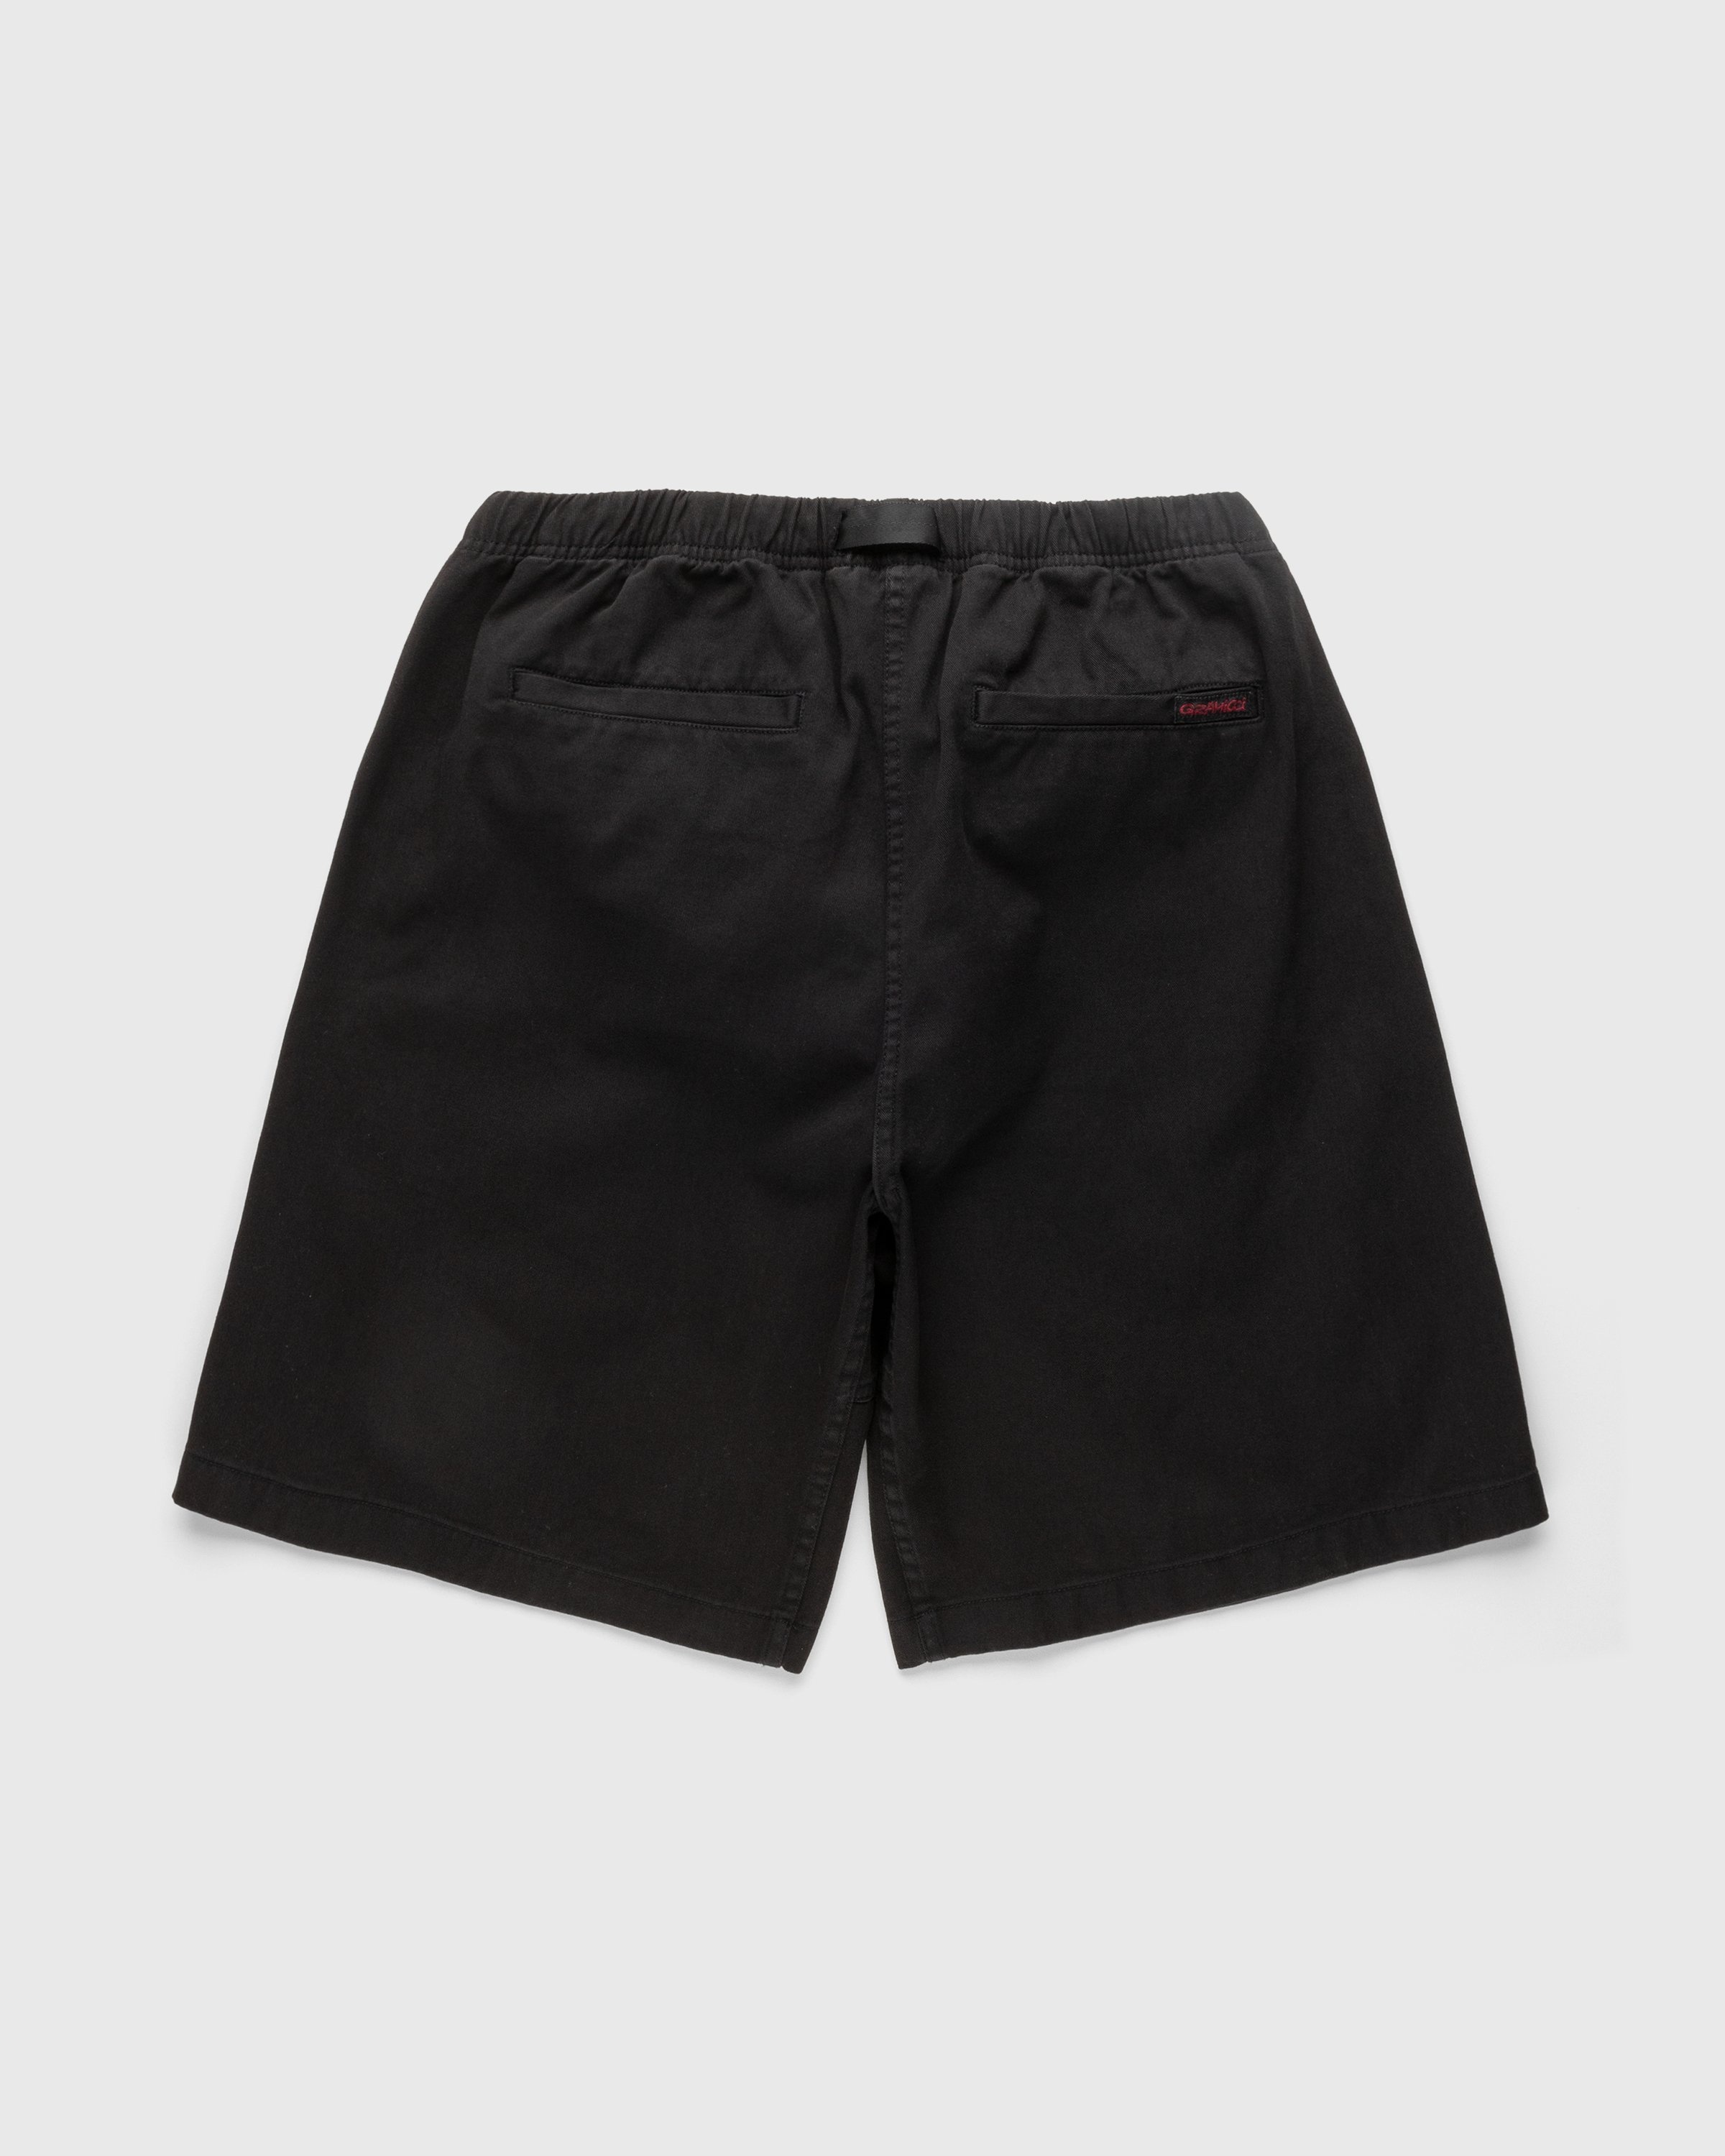 Gramicci – G-Shorts Black - Shorts - Black - Image 2